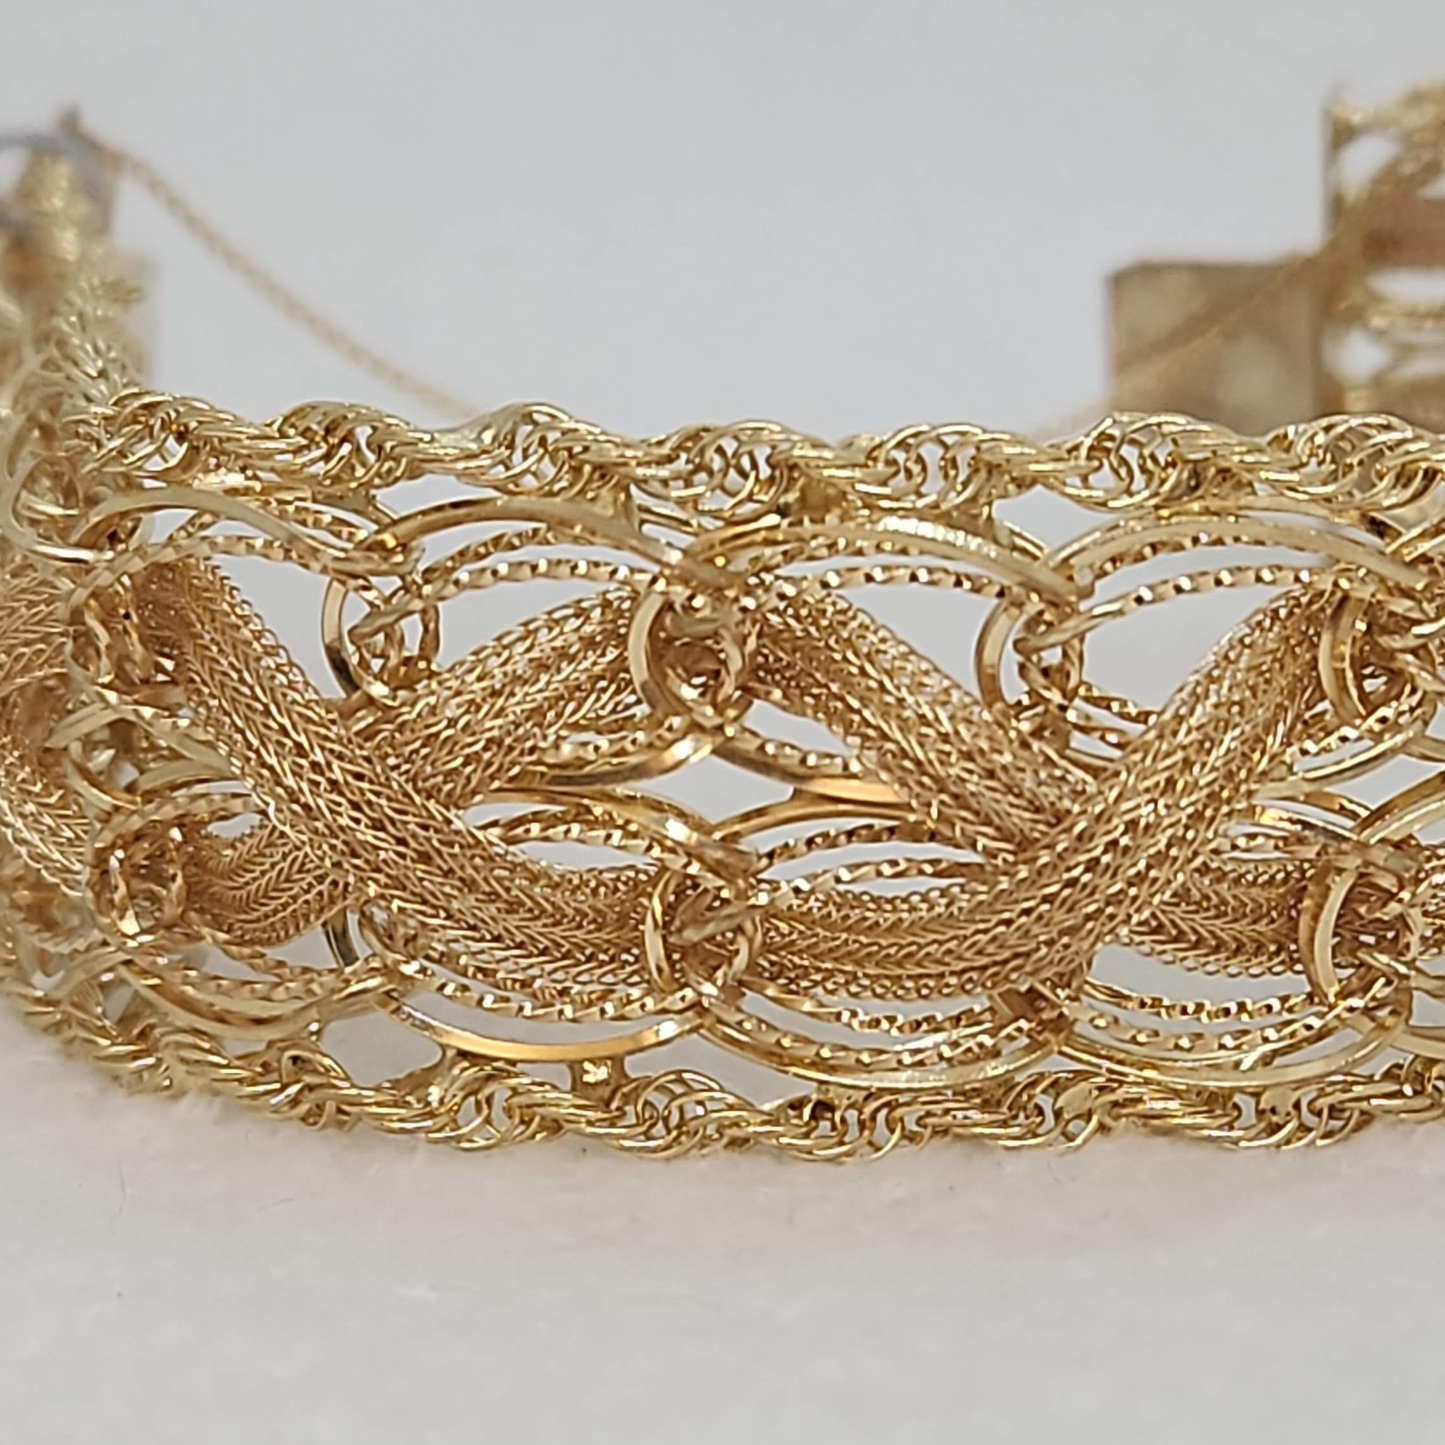 Woven Mid-Century Bracelet